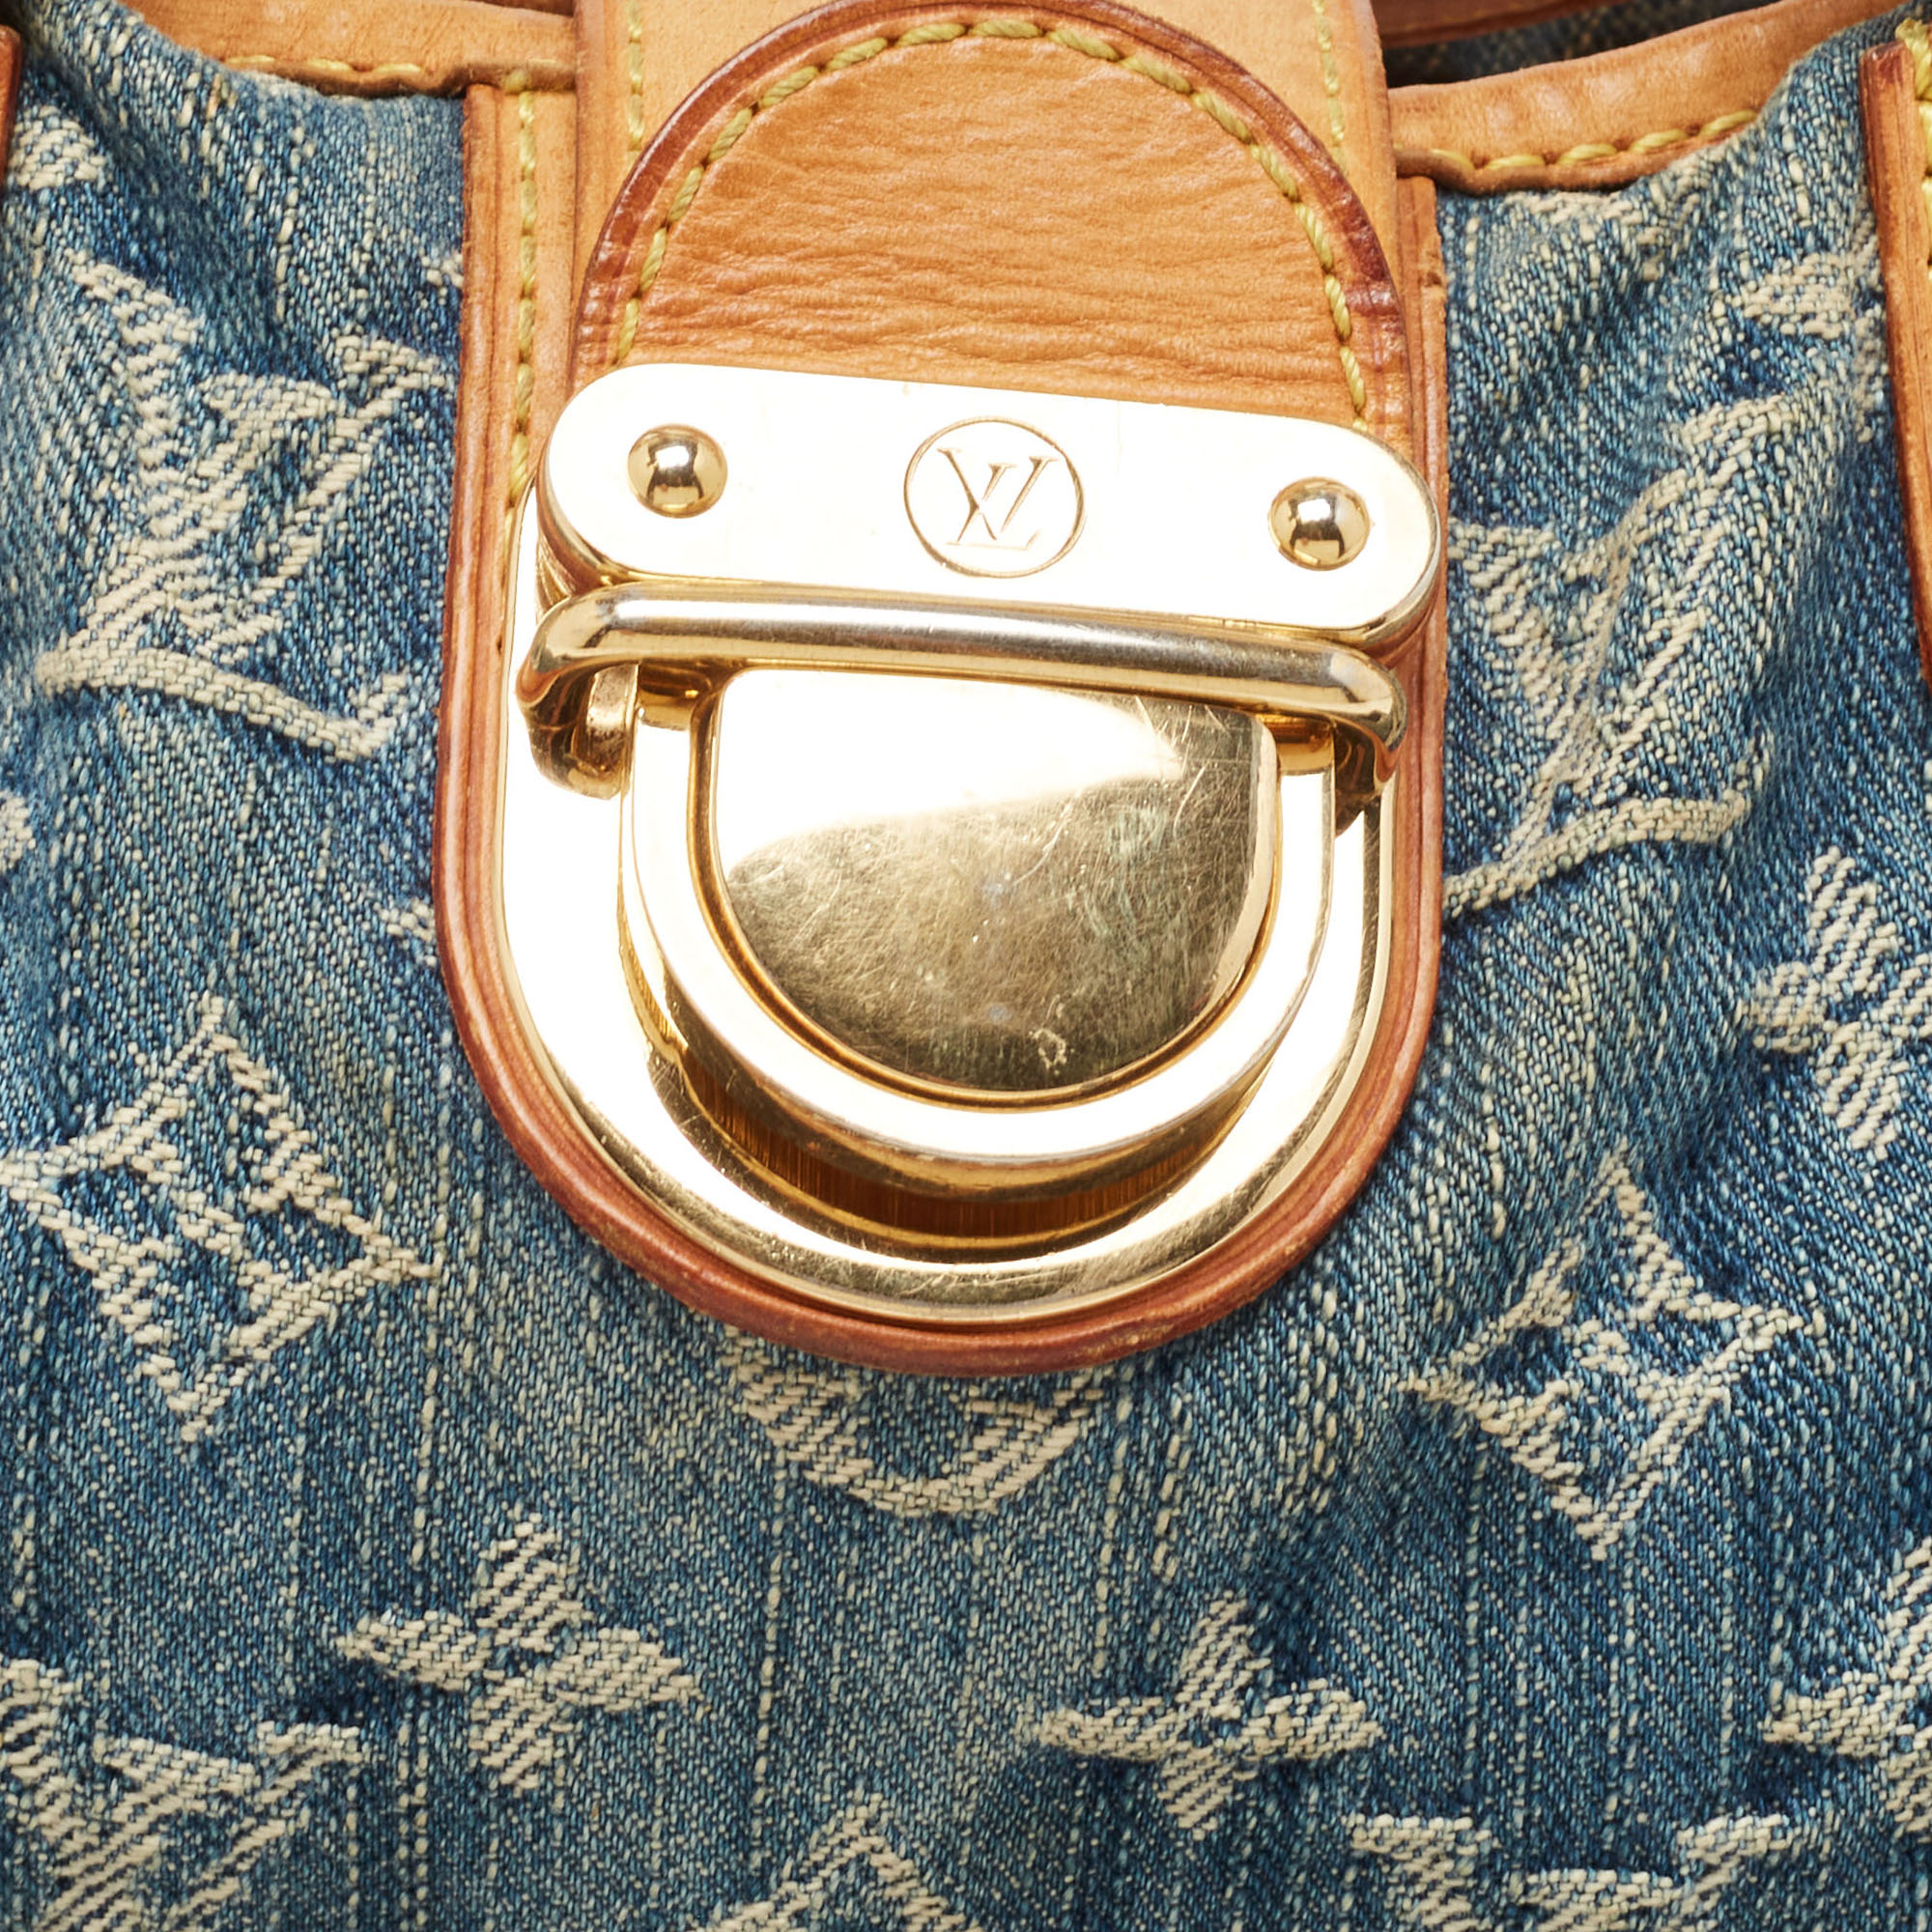 Louis Vuitton Blue Monogram Denim Pleaty Bag